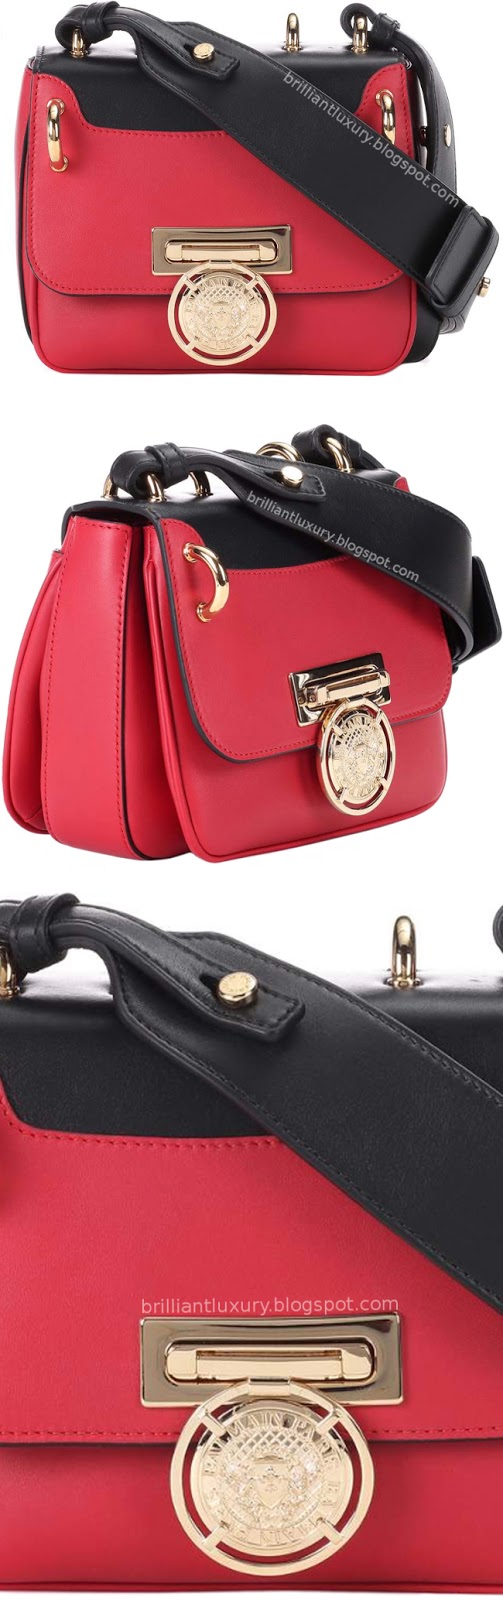 Brilliant Luxury ♦ Balmain Domaine 18 red leather shoulder bag